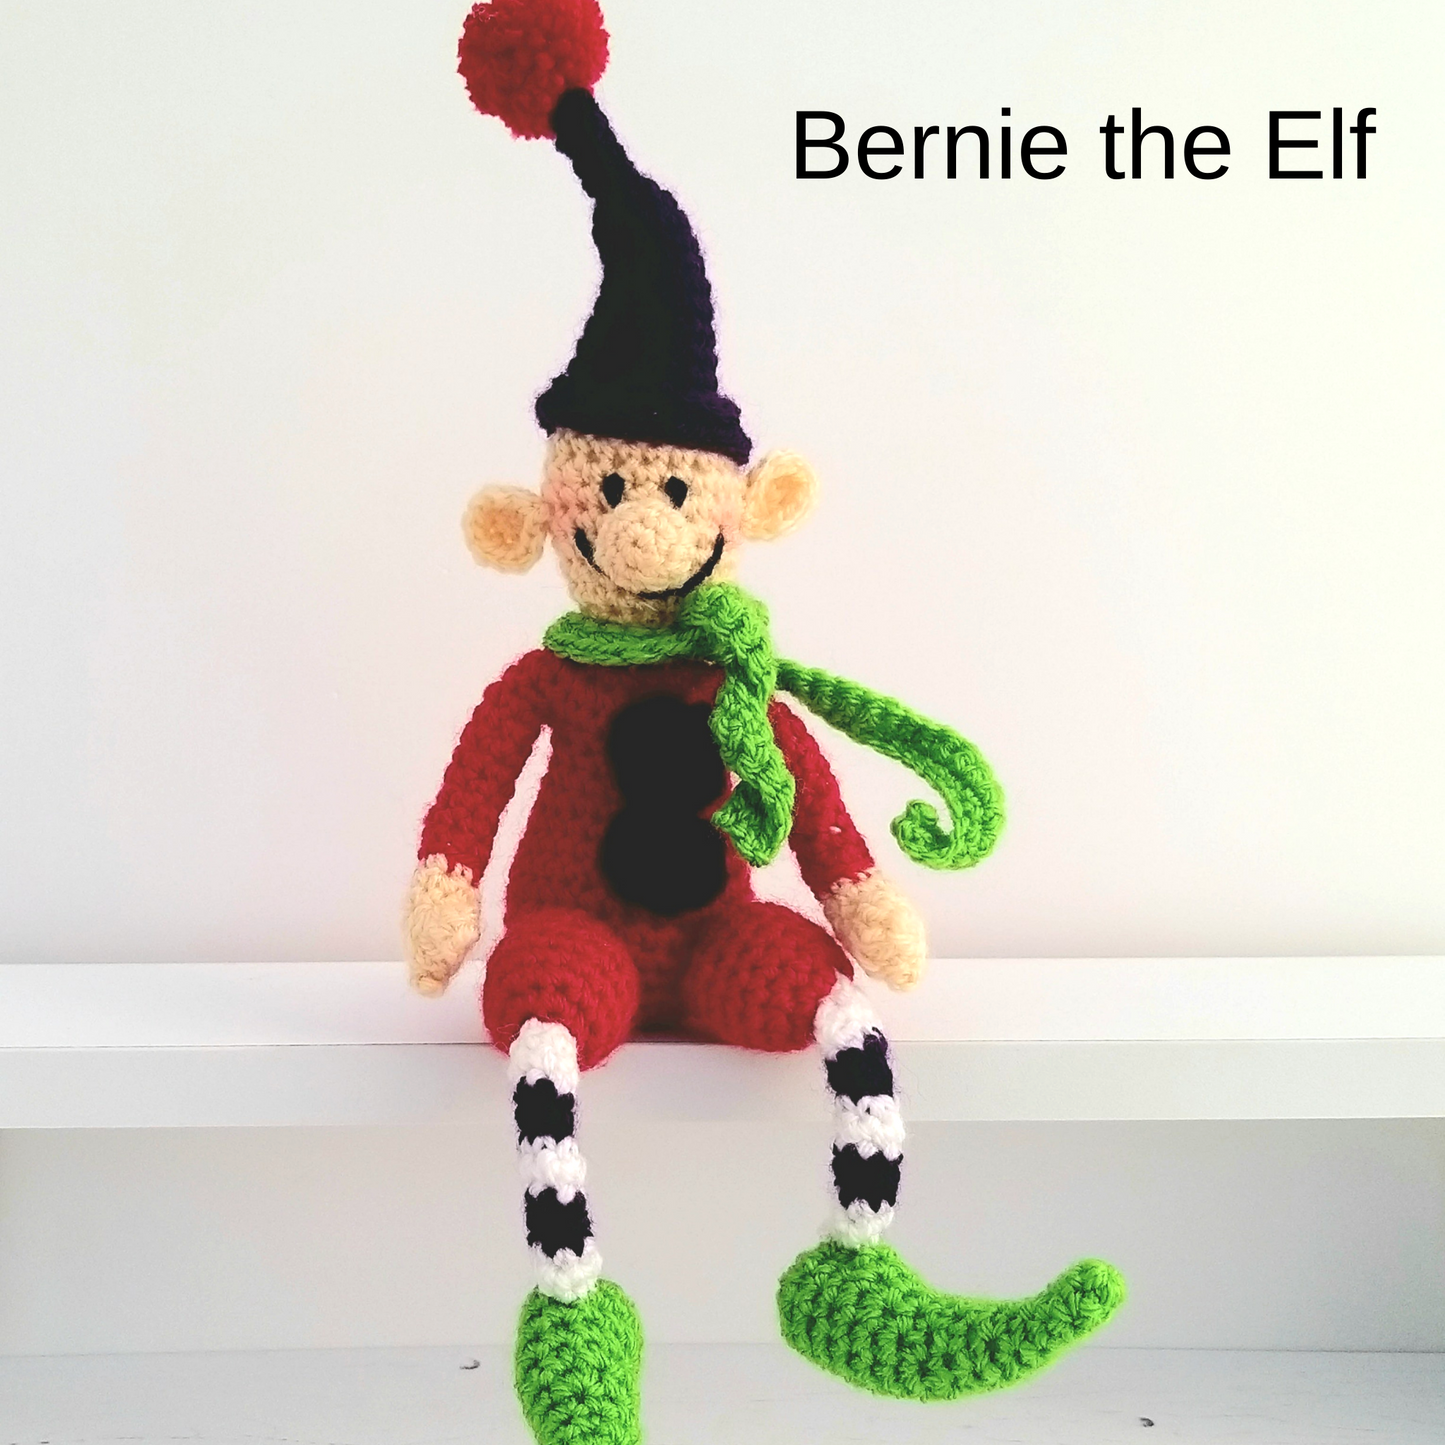 Bernie the Elf